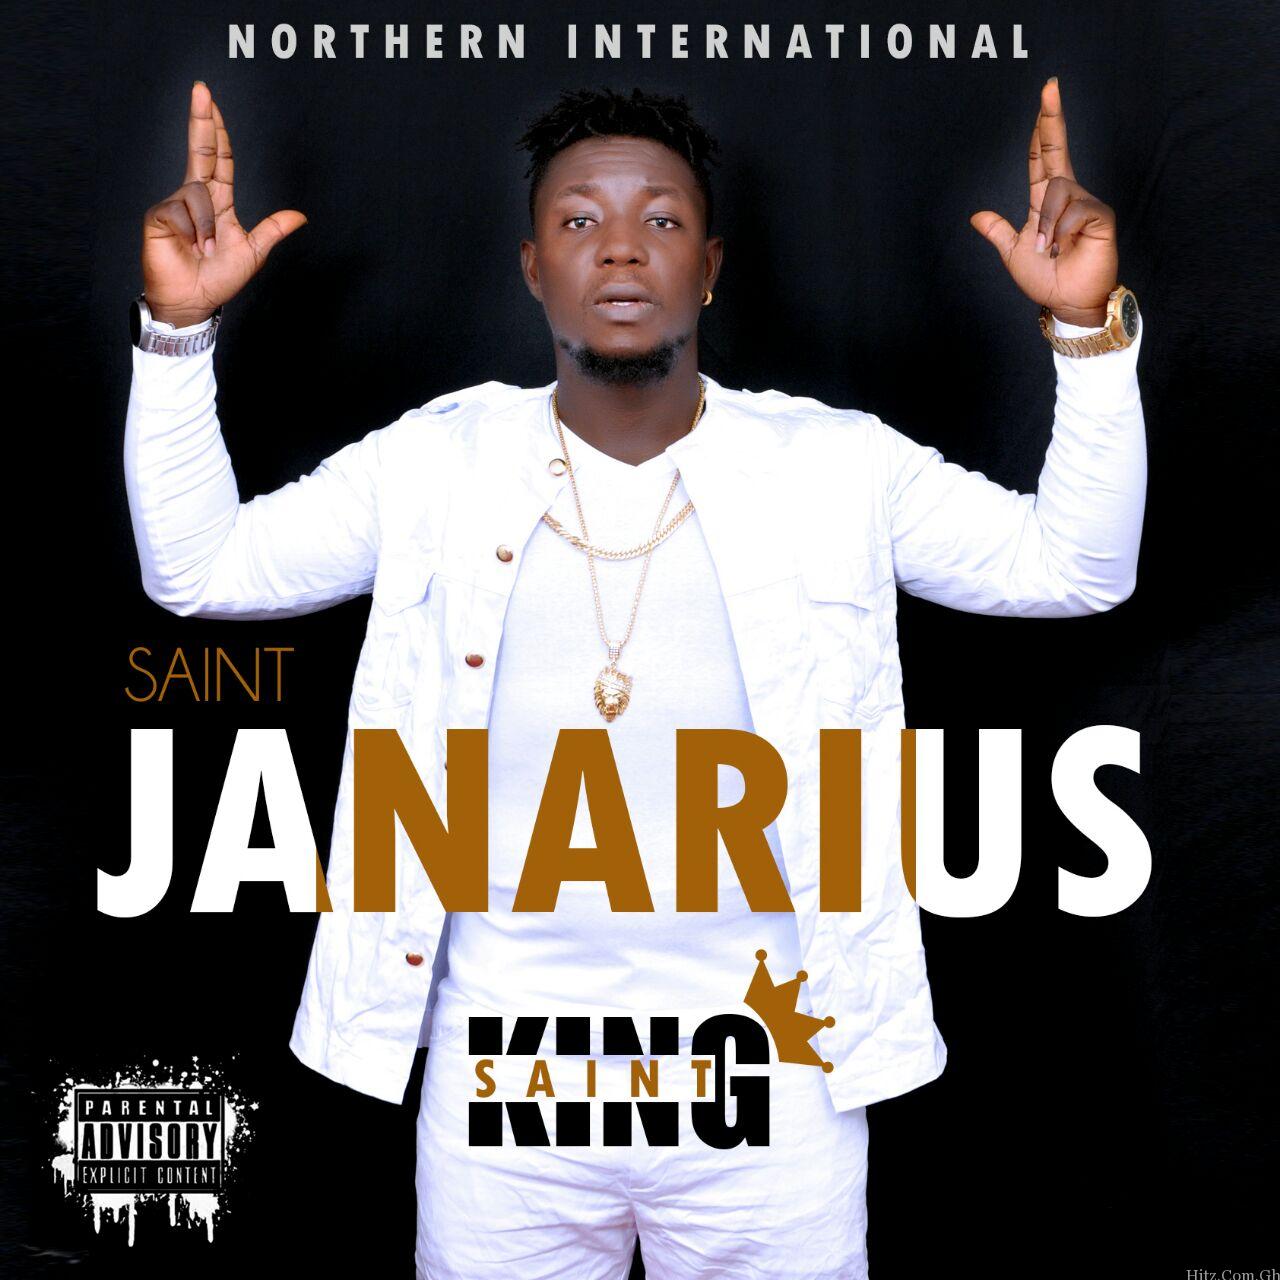 Saint Janarius King Saint Watch Your Back Prod